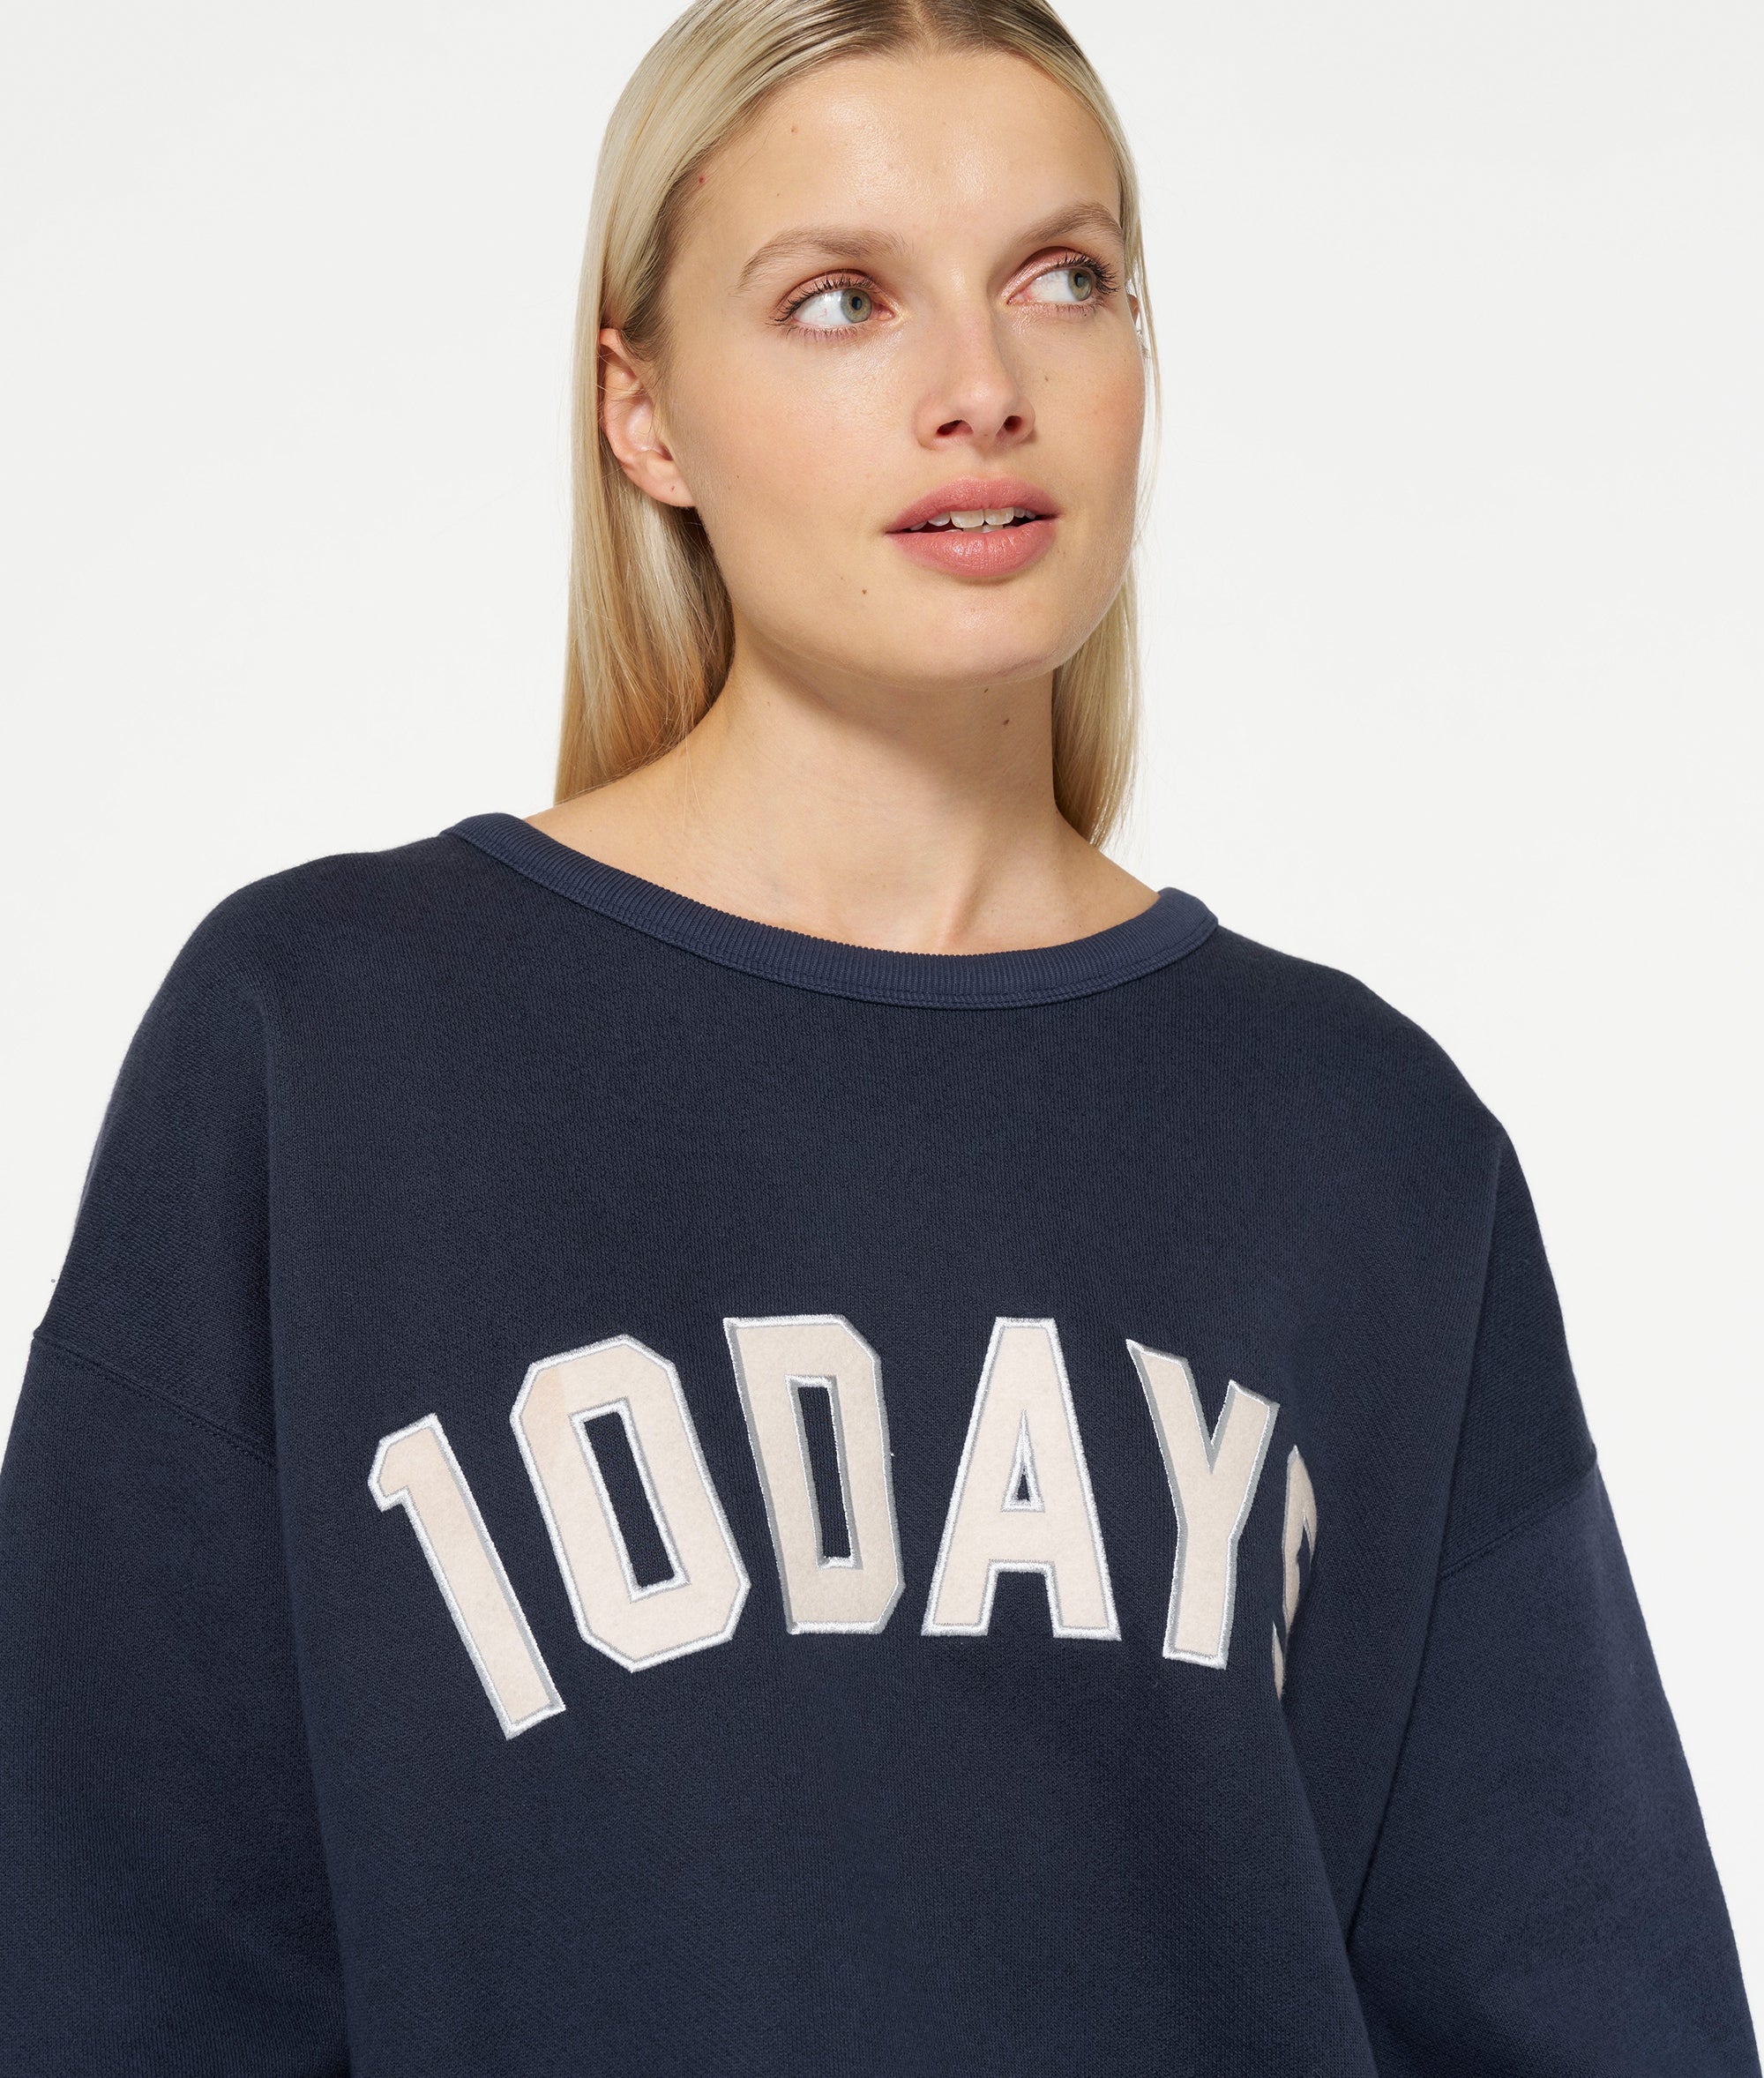 10 DAYS Statement Sweater